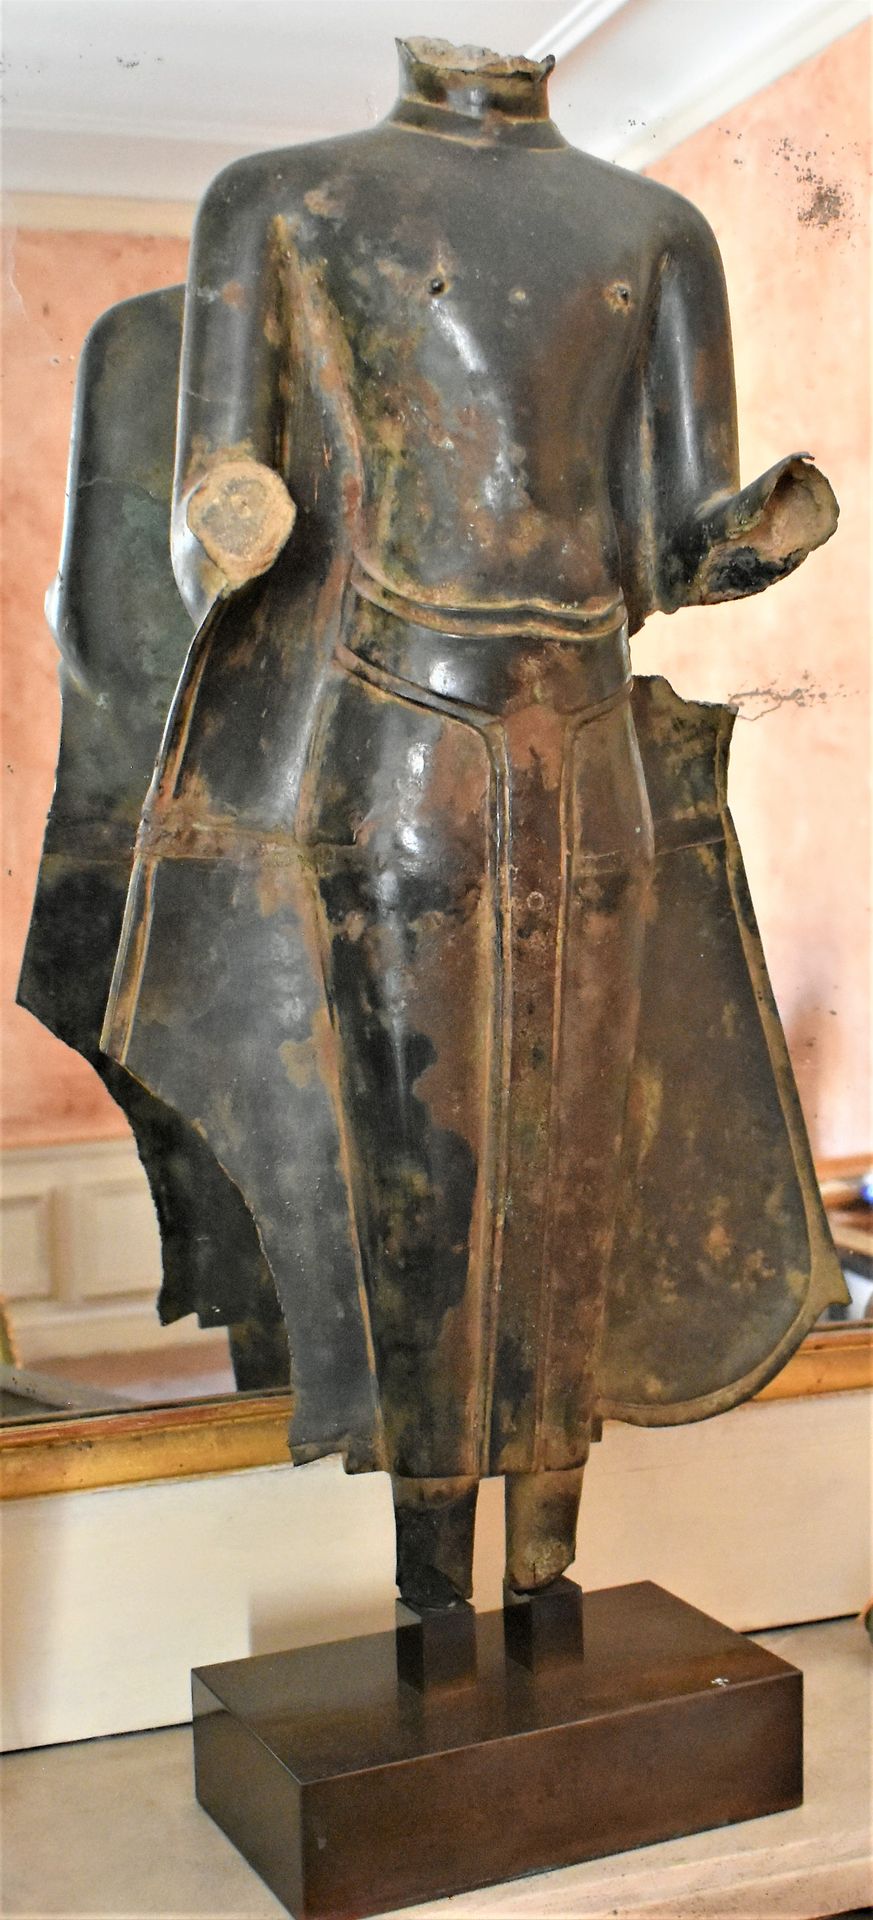 Null 一尊安详的佛像，填充青铜，有深色的铜锈（手在abhaya-mura中，脚缺失，修复后可见）。泰国，大概18世纪。在一个基地上。高64厘米